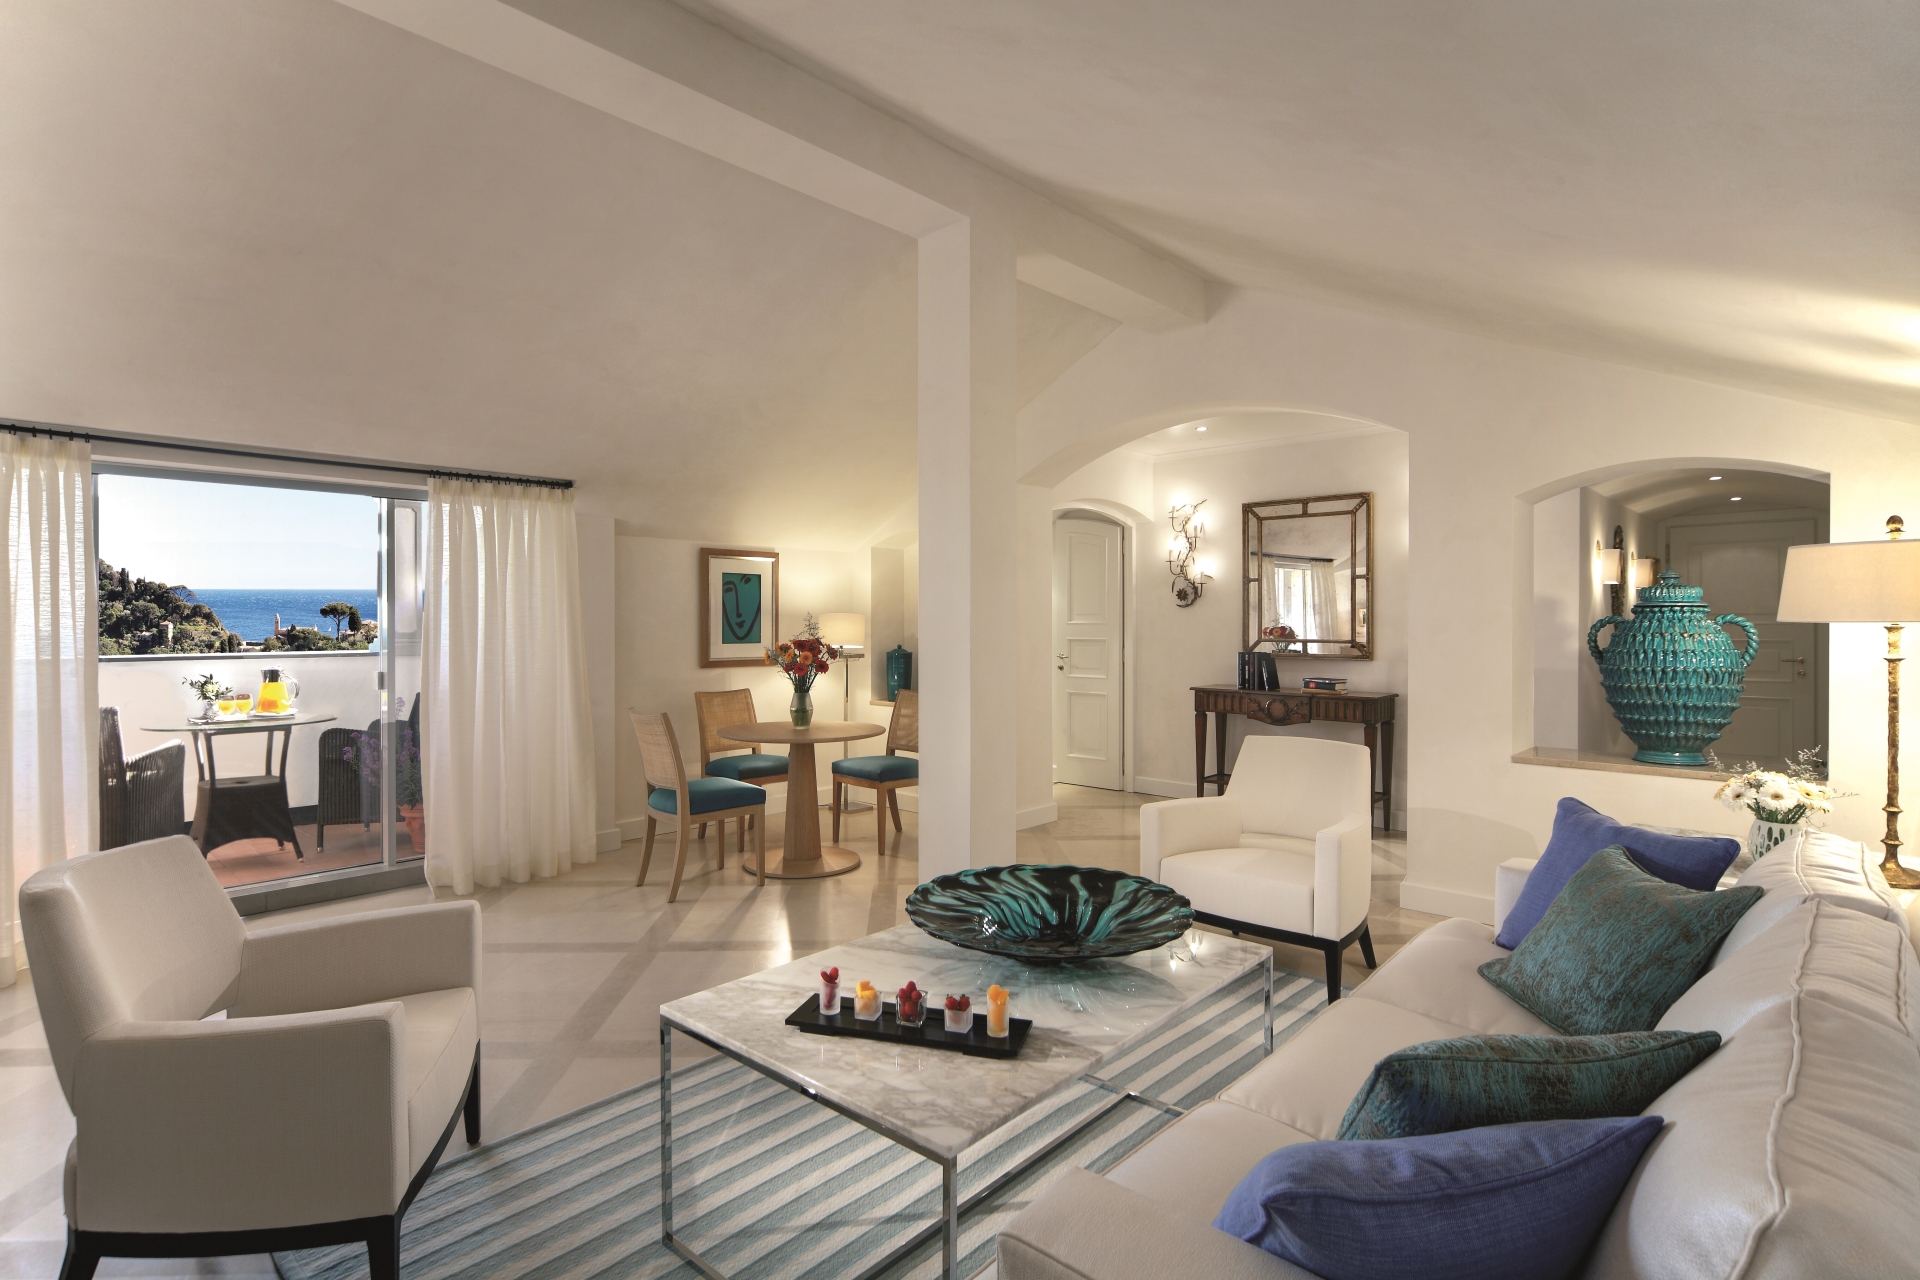 Suite living room - Belmond Hotel Splendido Mare